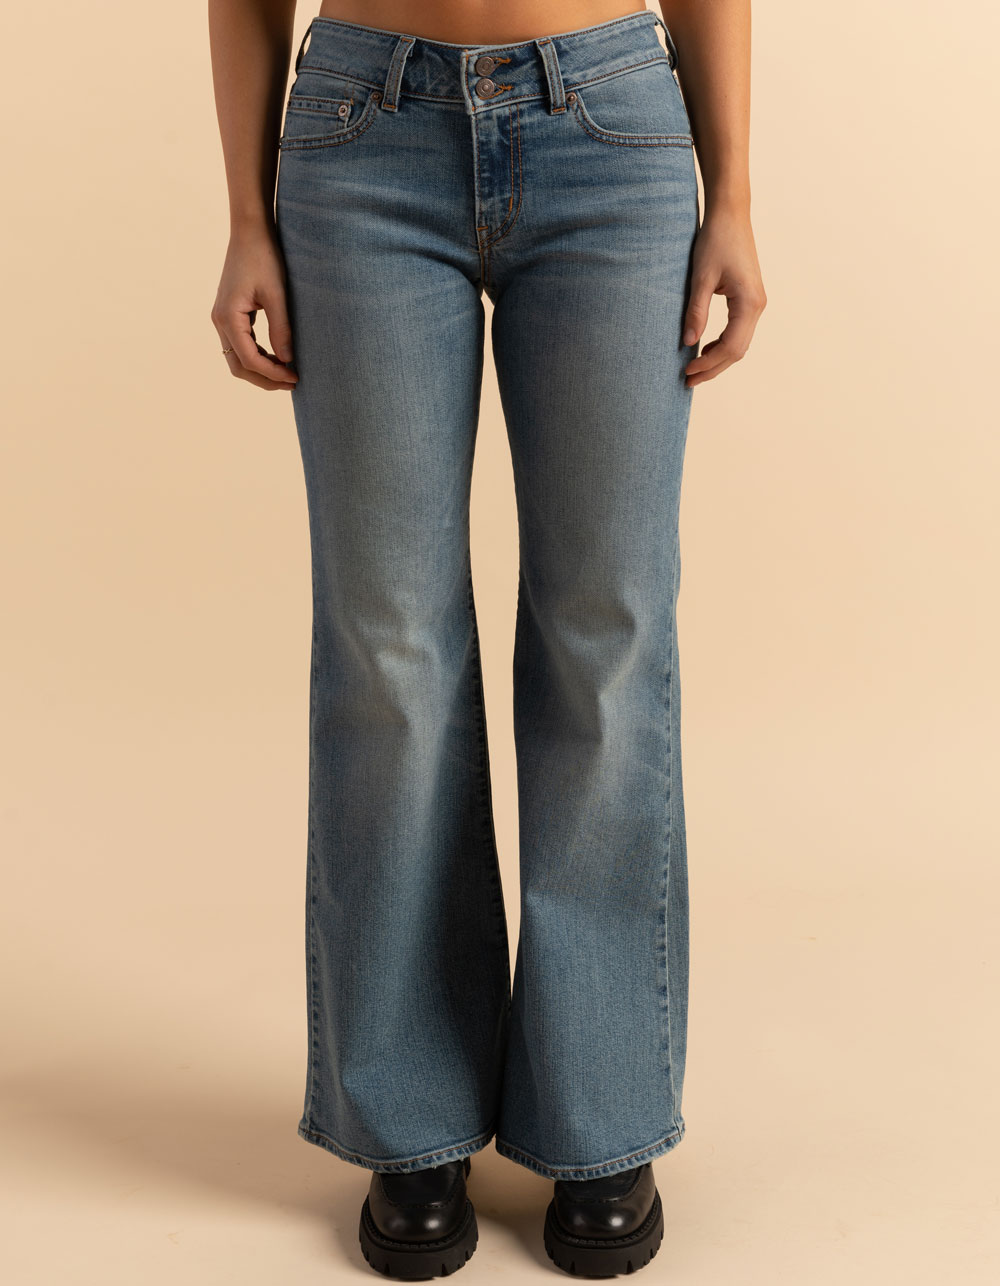 LEVI'S Superlow Flare Womens Jeans - The Big Idea - LT BLAST | Tillys